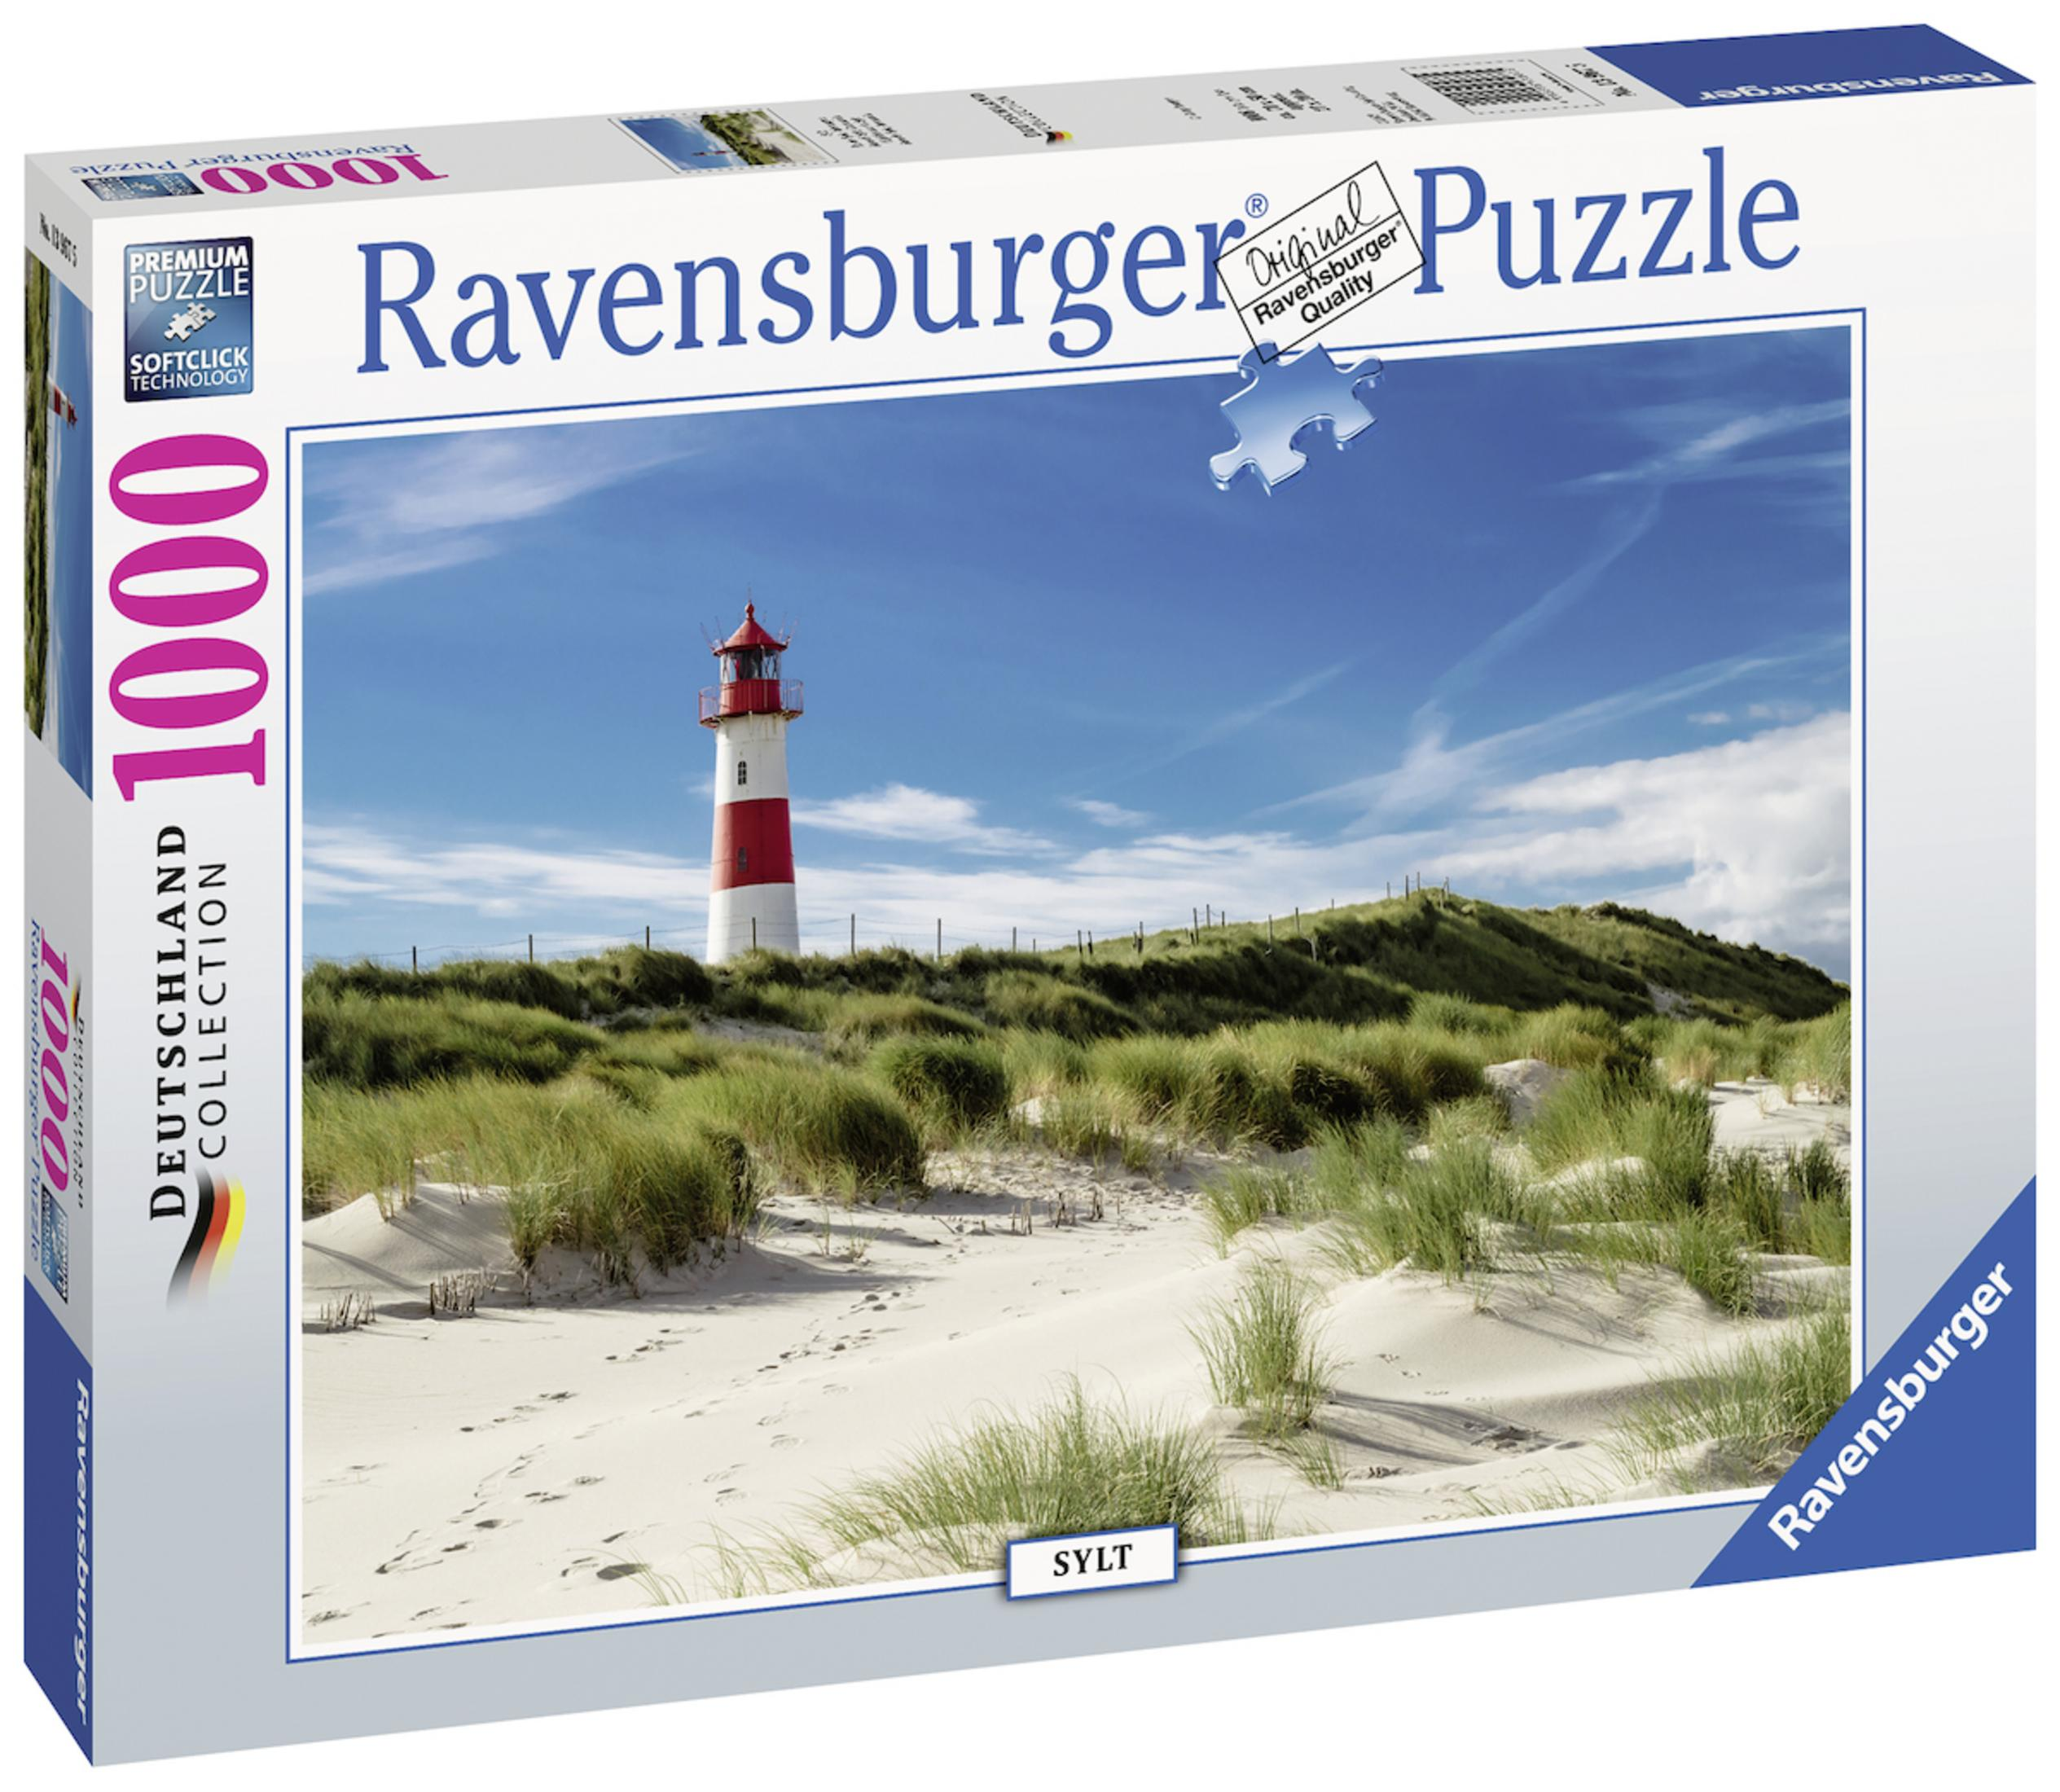 Puzzle 13967 SYLT RAVENSBURGER